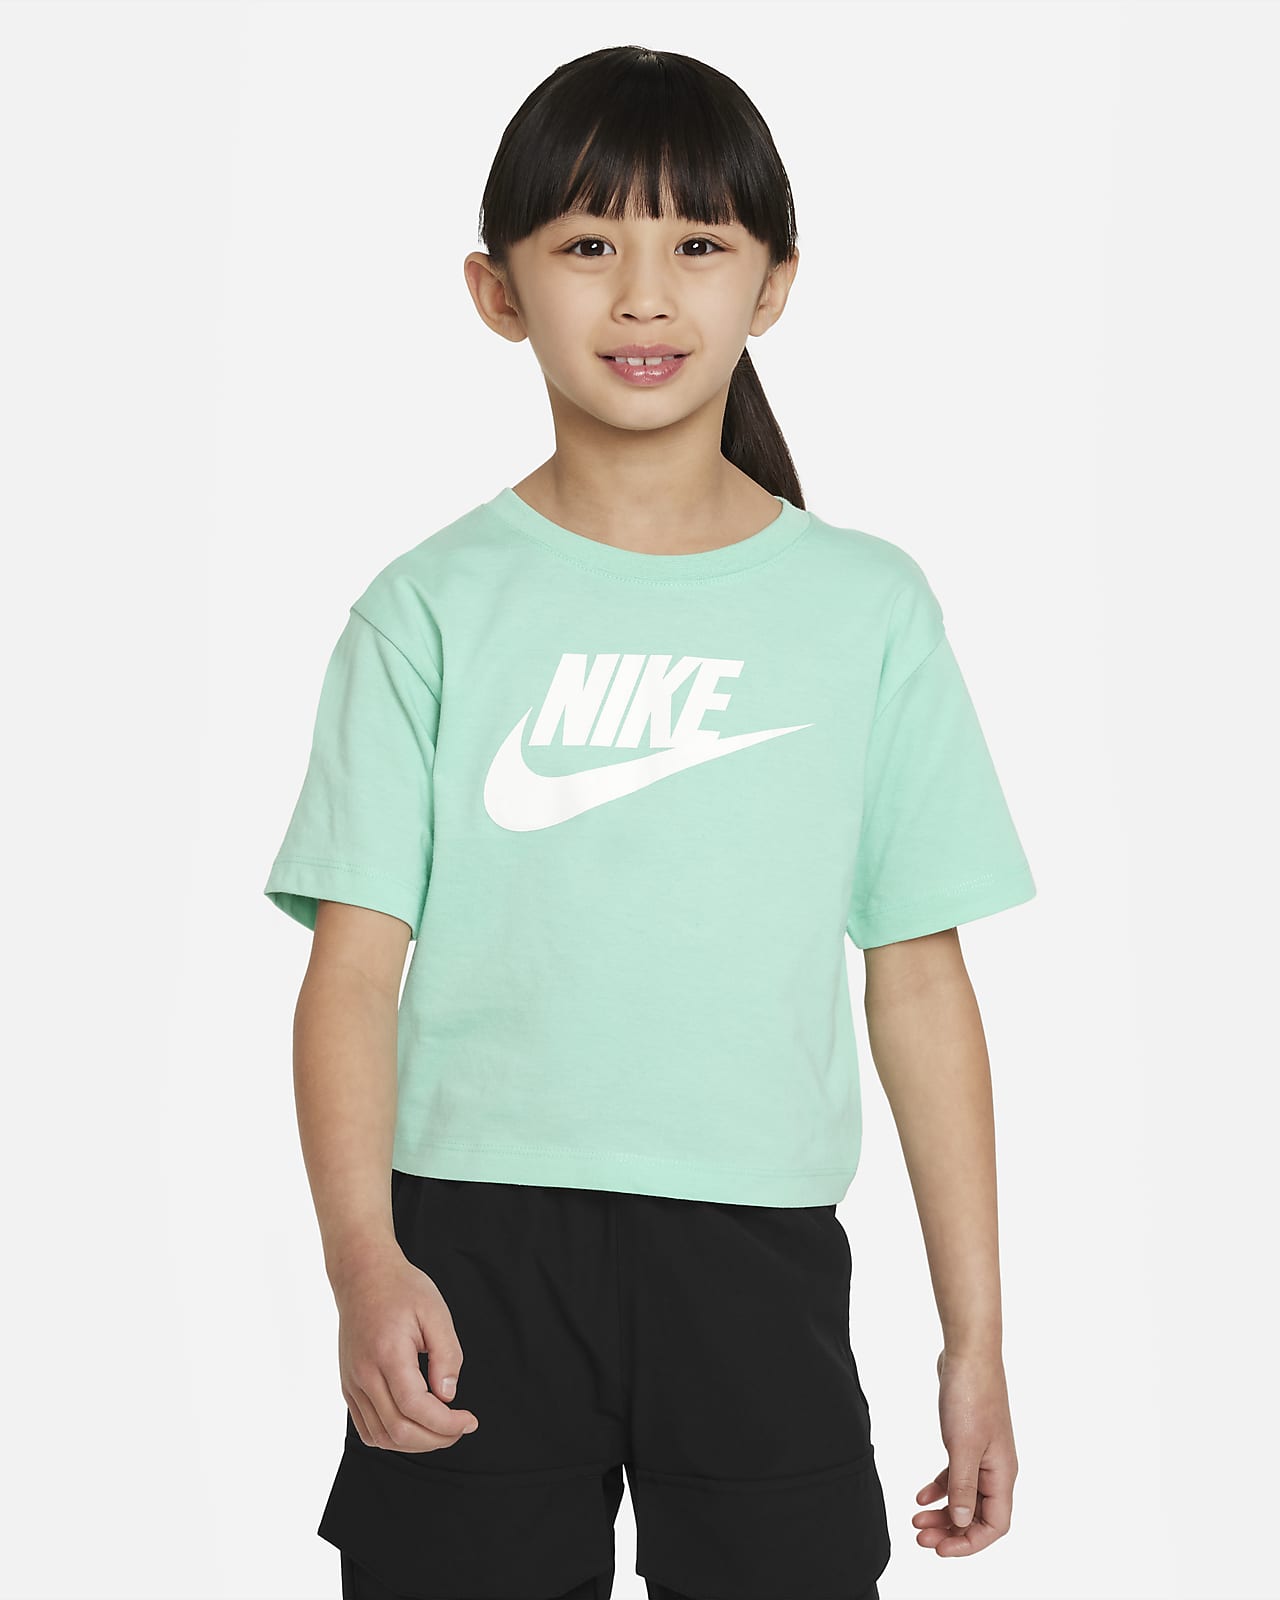 Boxy Nike Kids Tee T-Shirt. Little Club